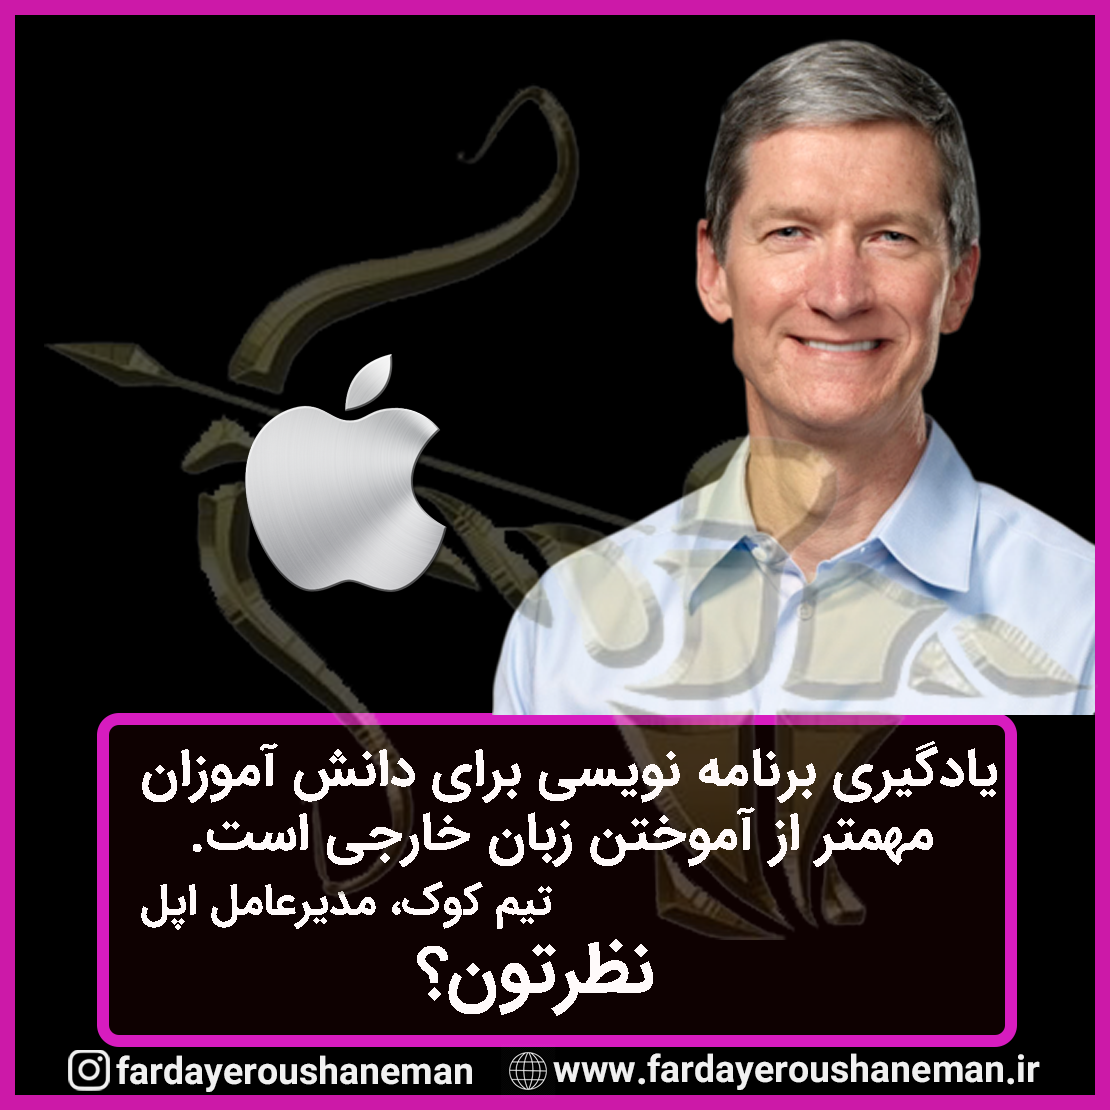 Apple CEO